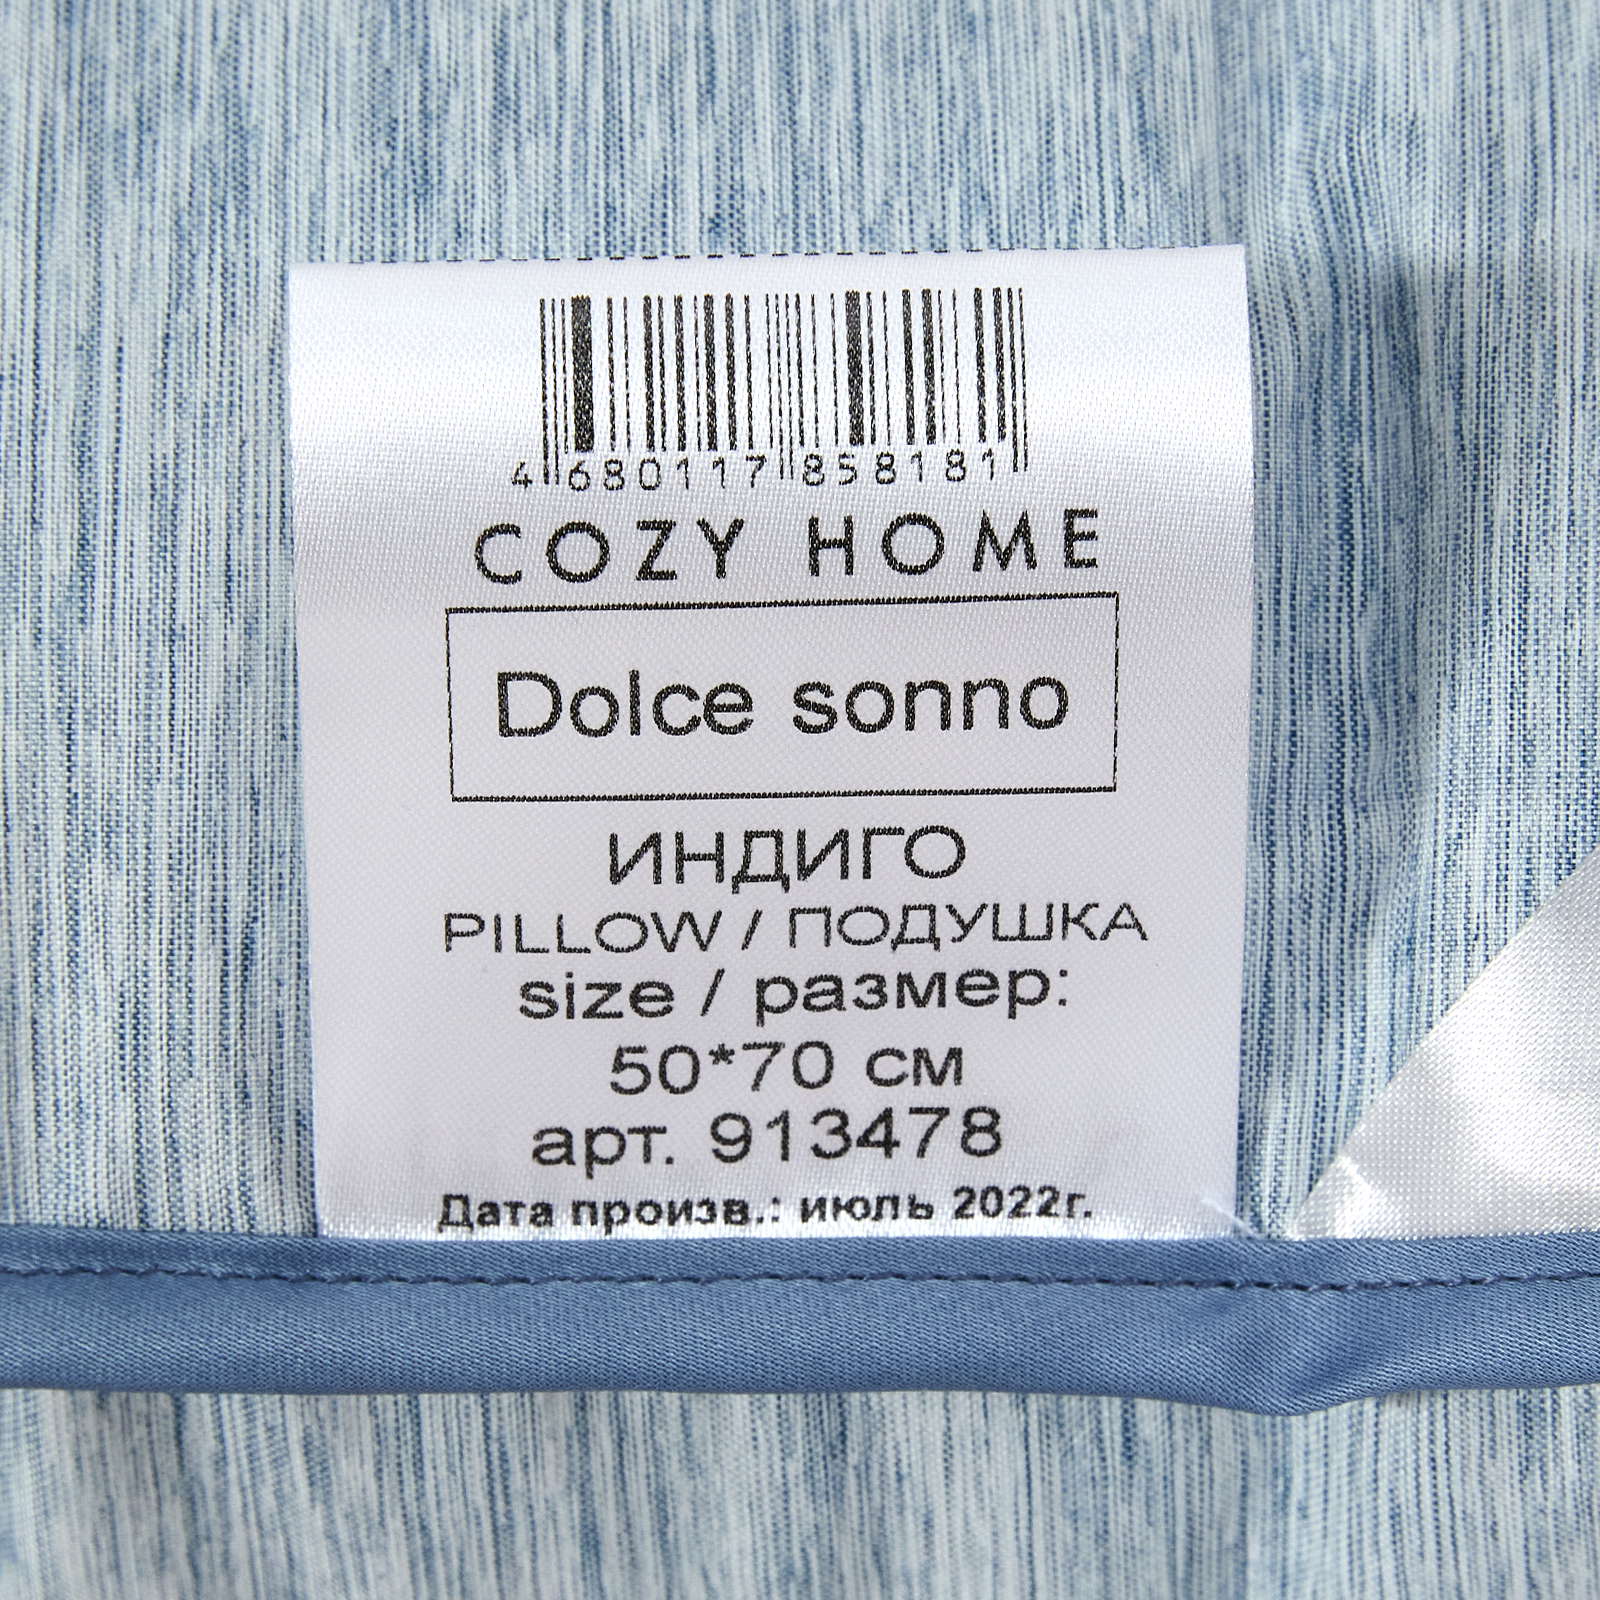 Подушка Dolce sonno CozyHome, цвет синий, размер 50х70 - фото 4